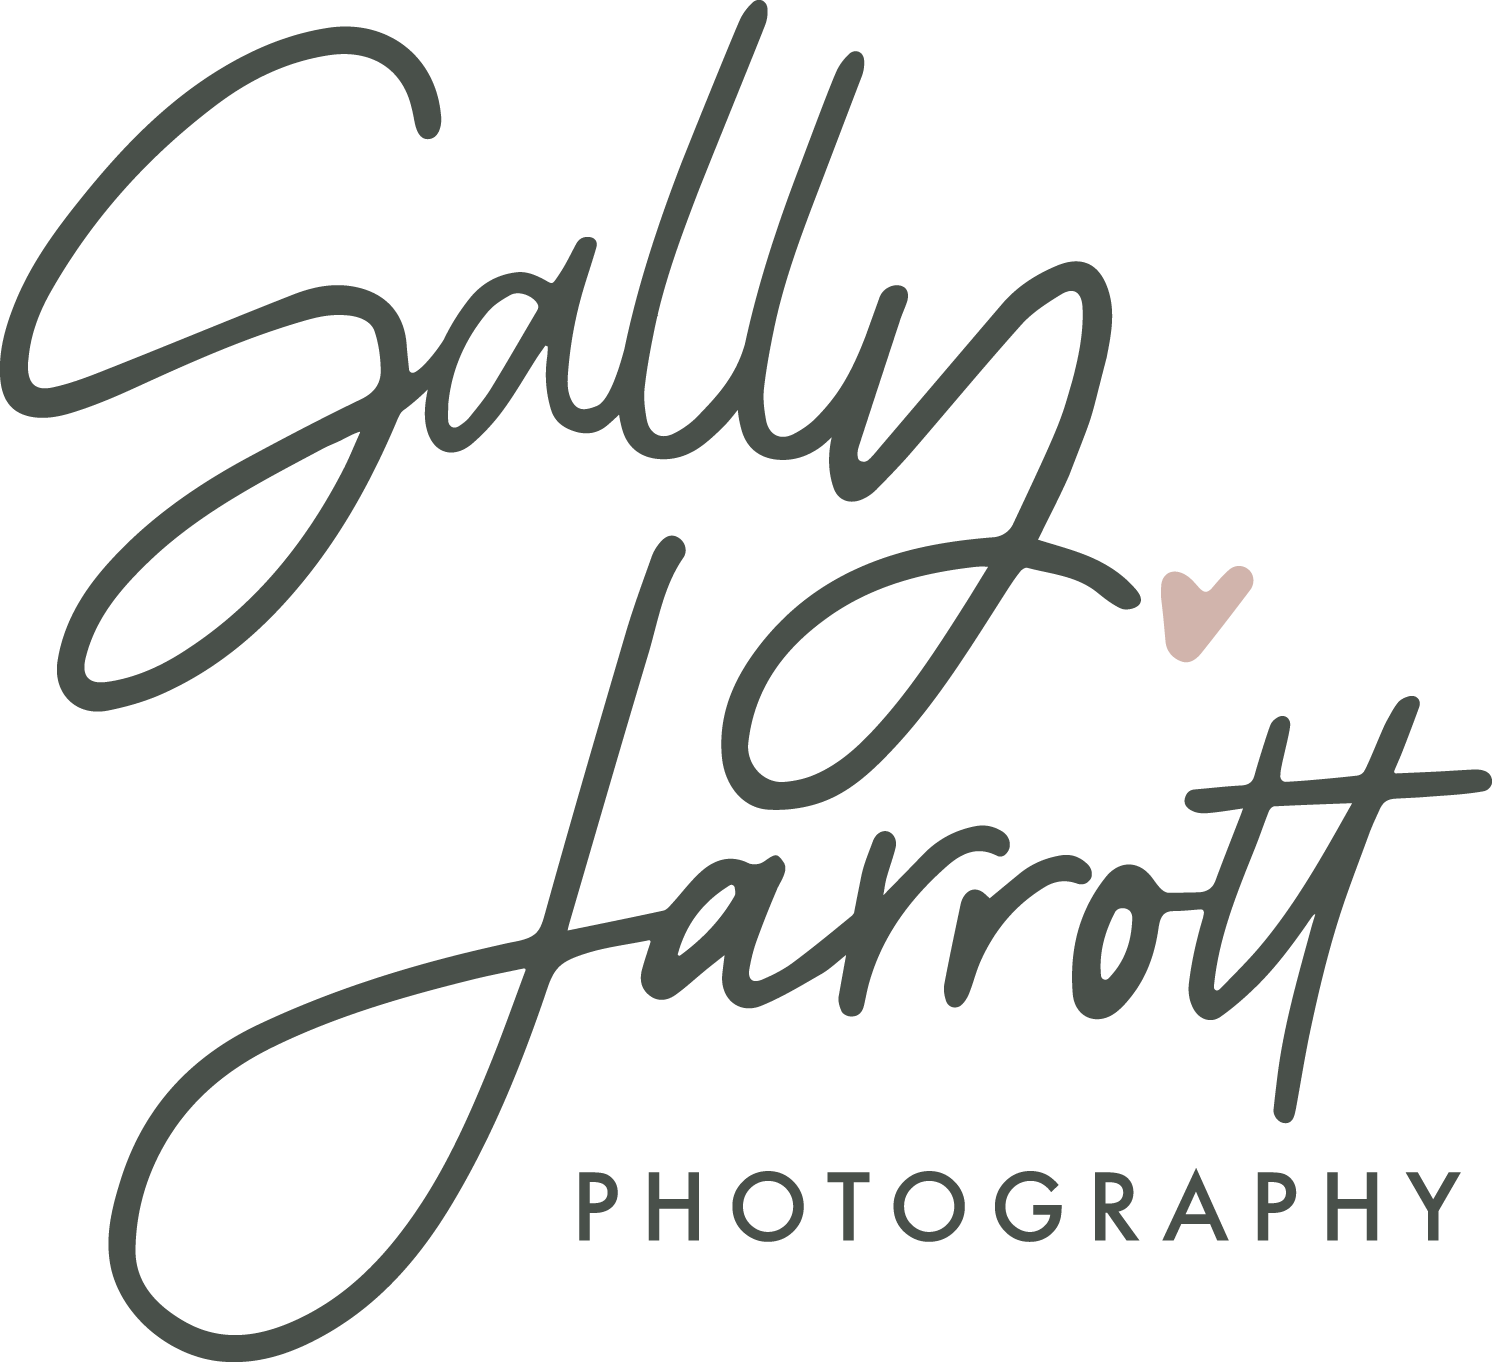 Sally Jarrott Photography